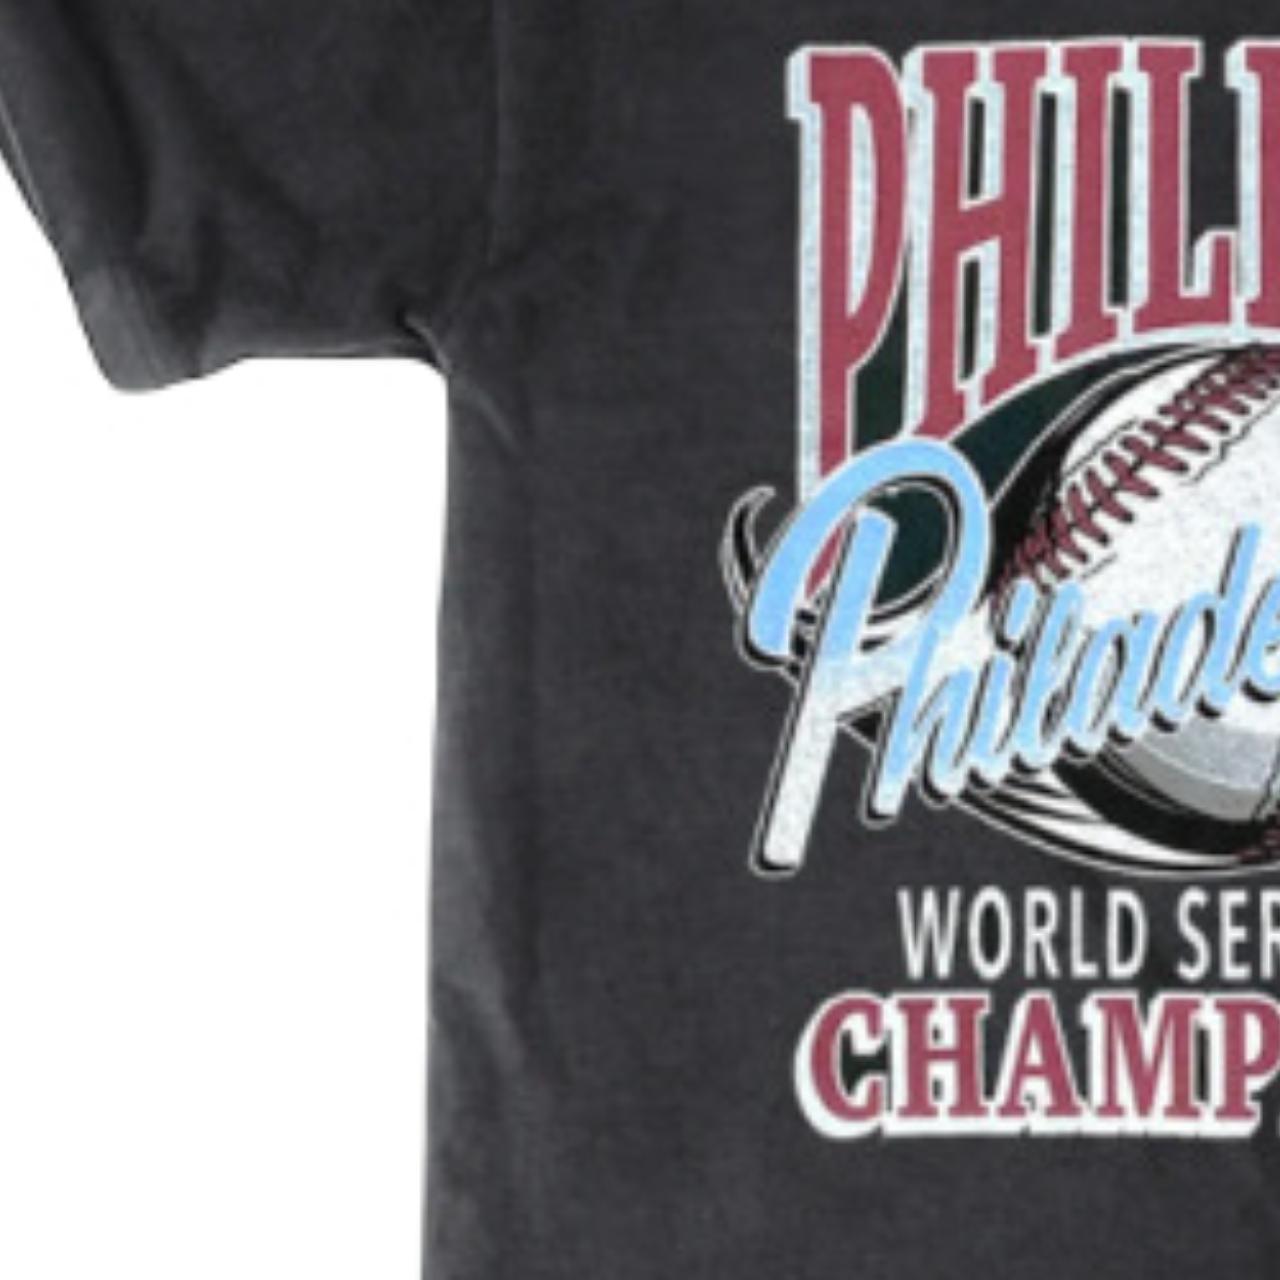 1980 Champs Baseball t-shirt